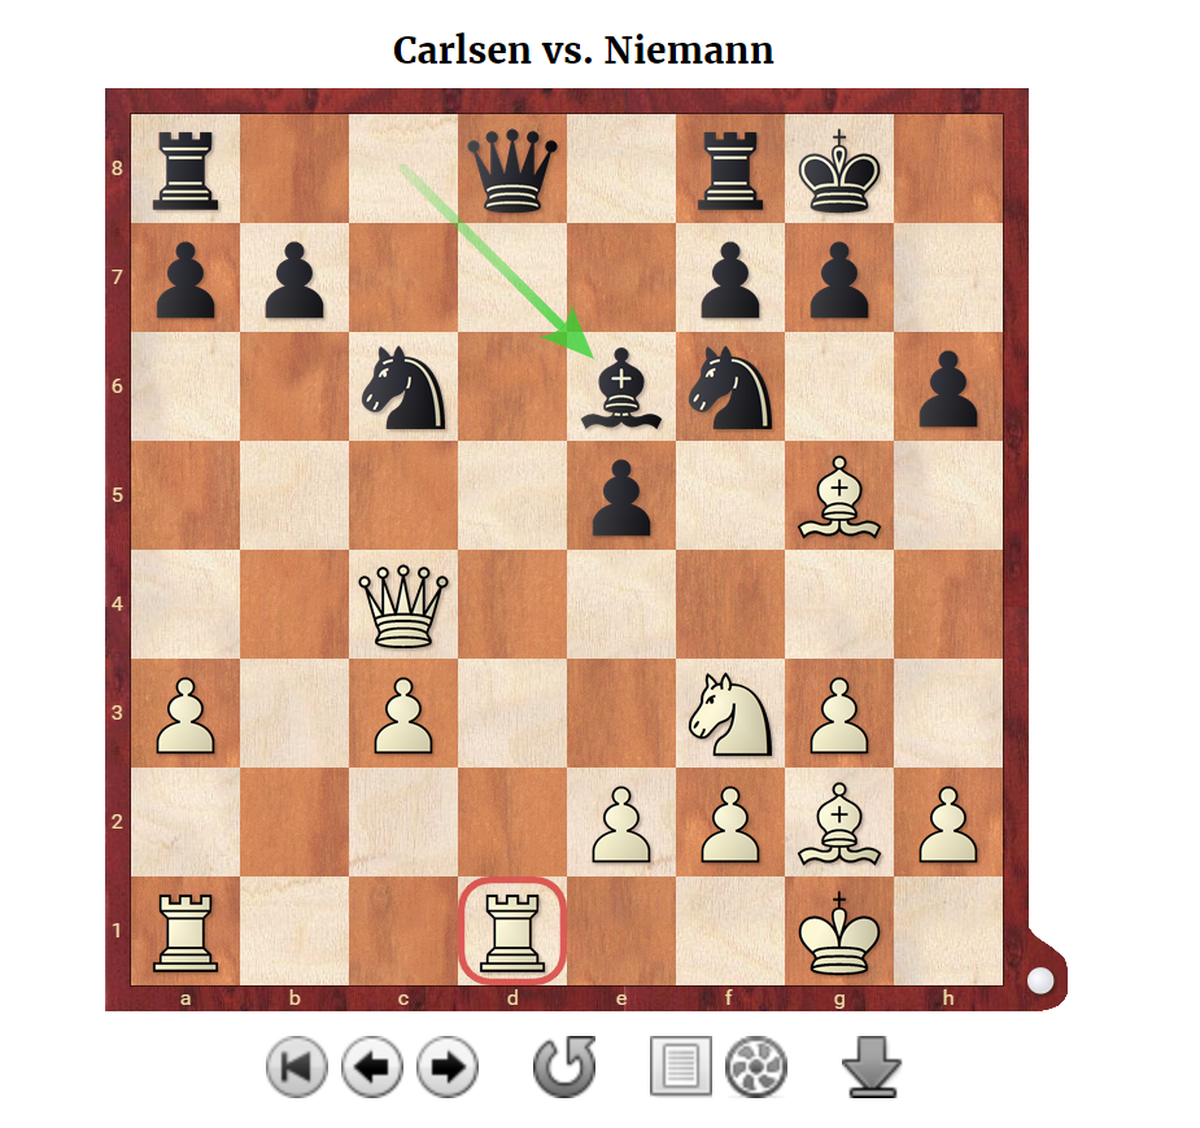 Sinquefield Cup 3: Niemann beats Carlsen to cross 2700